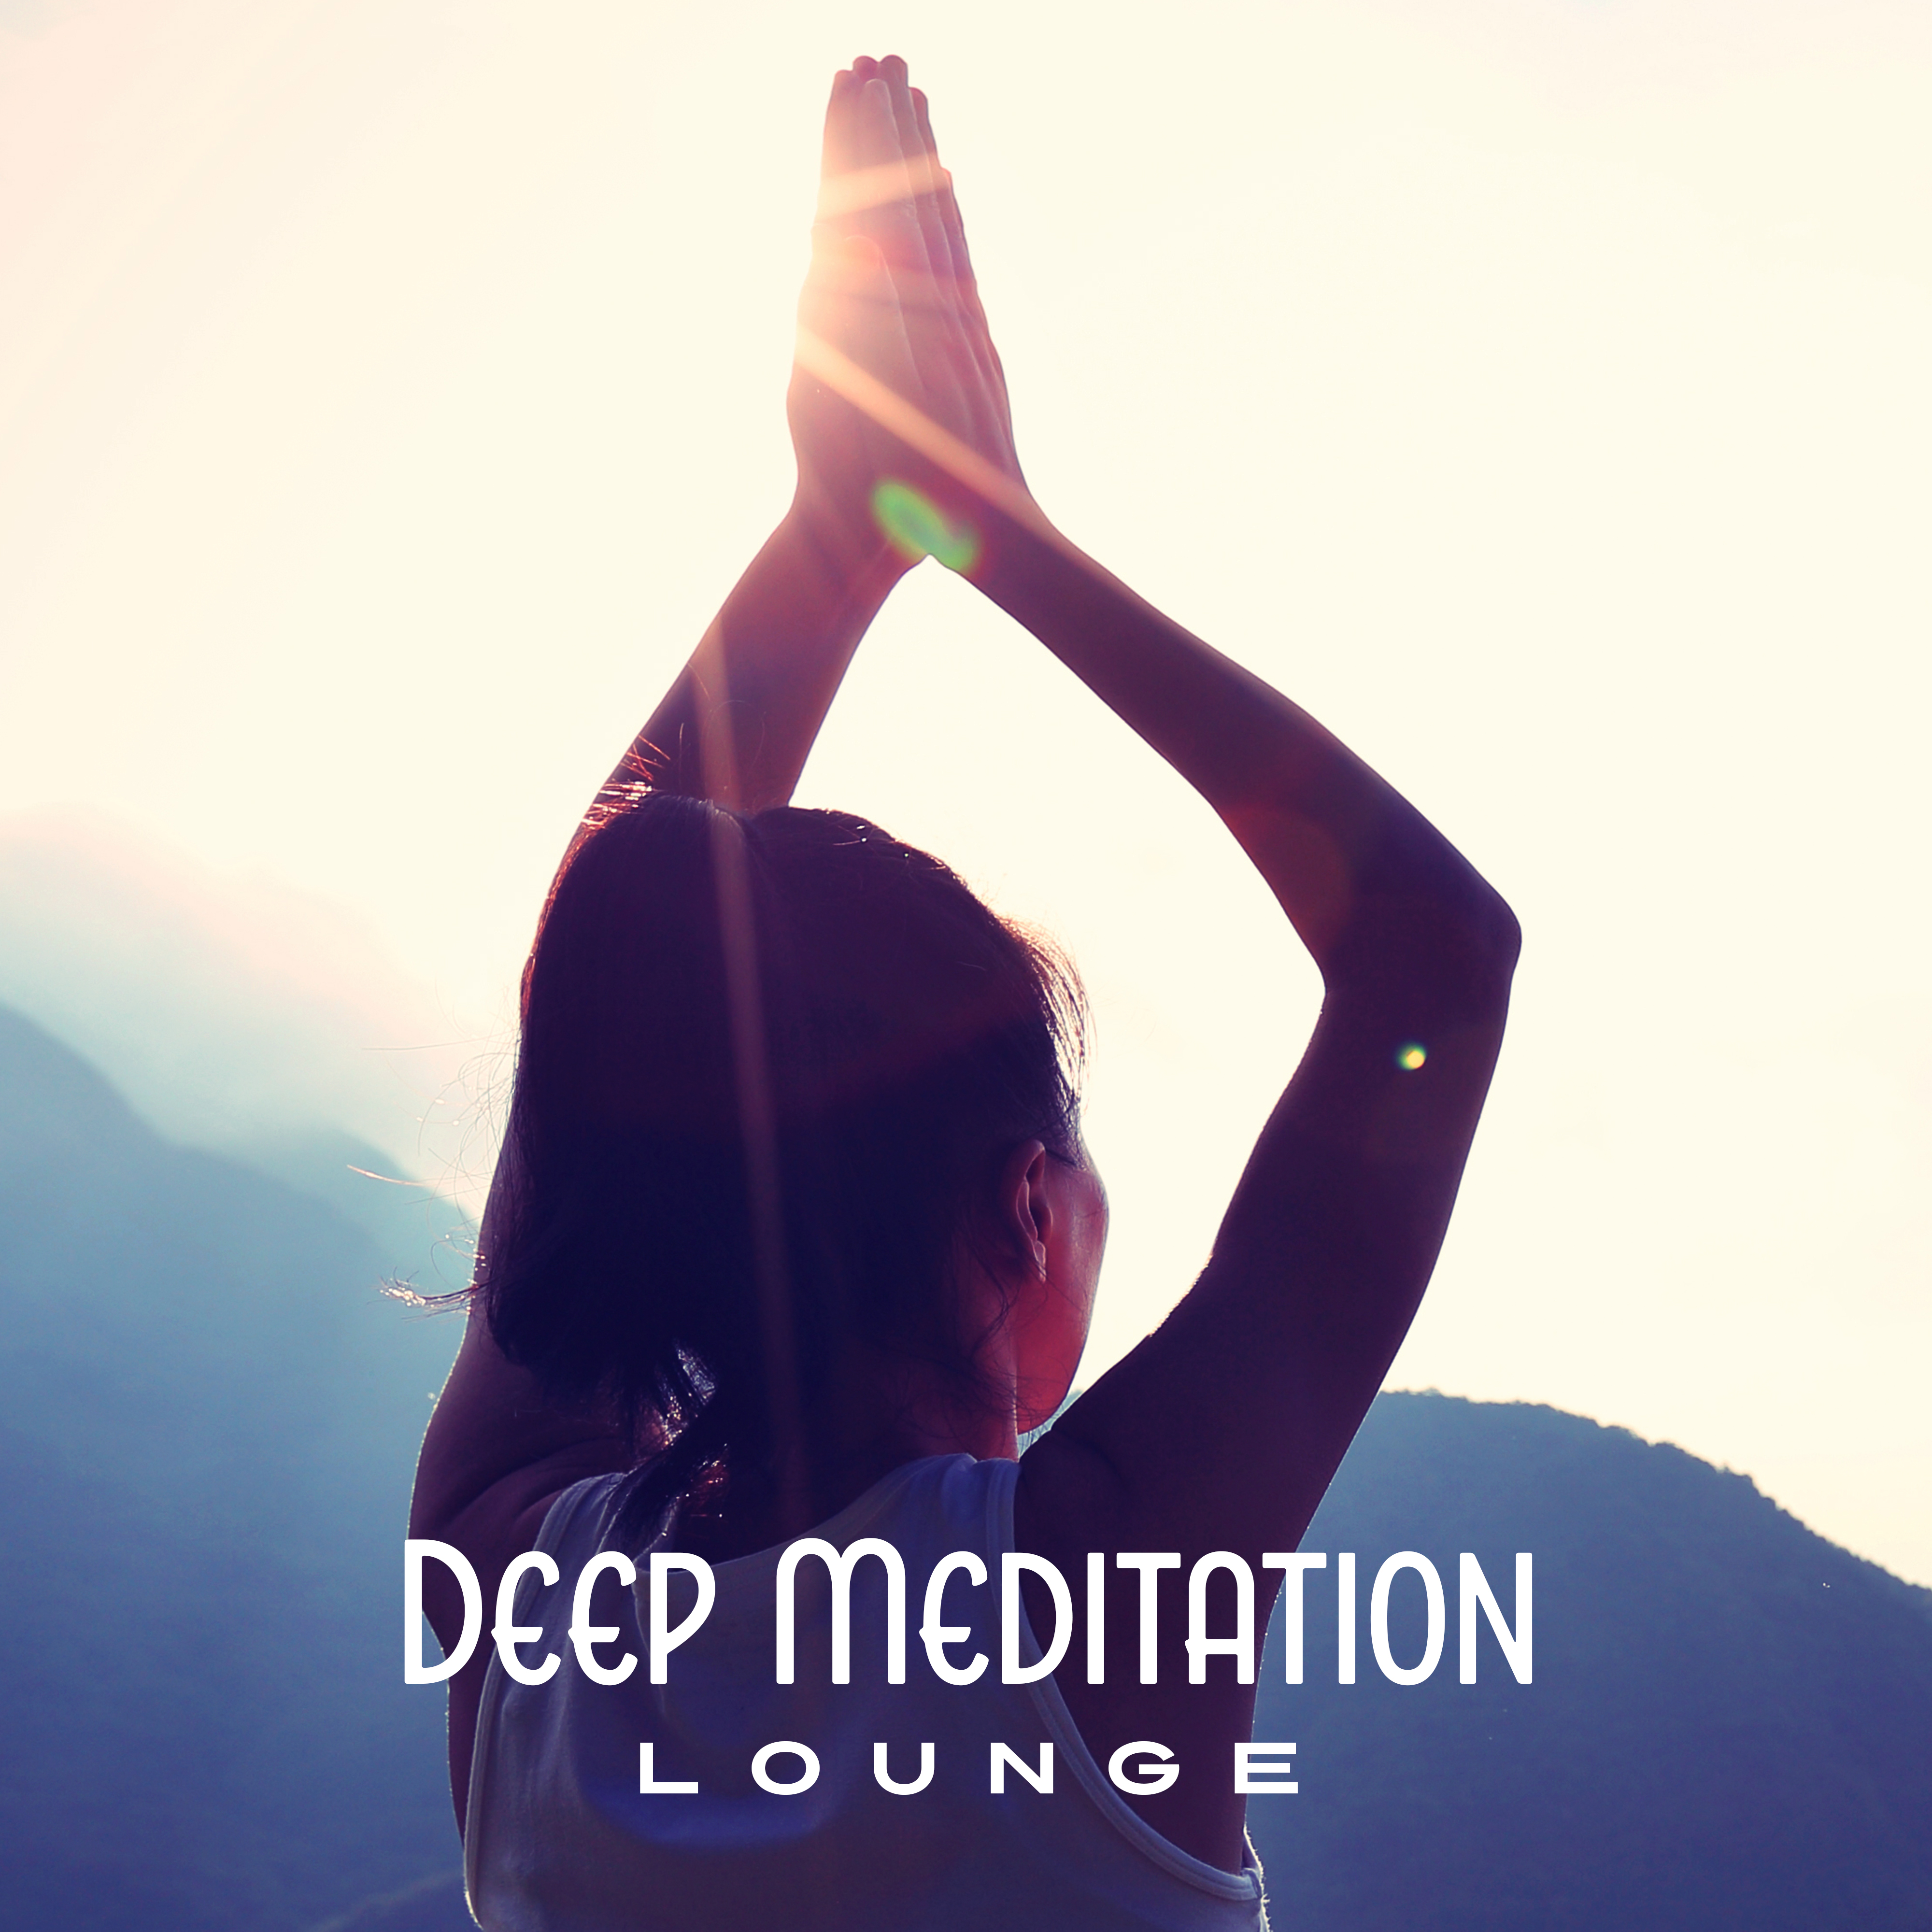 Deep Meditation Lounge